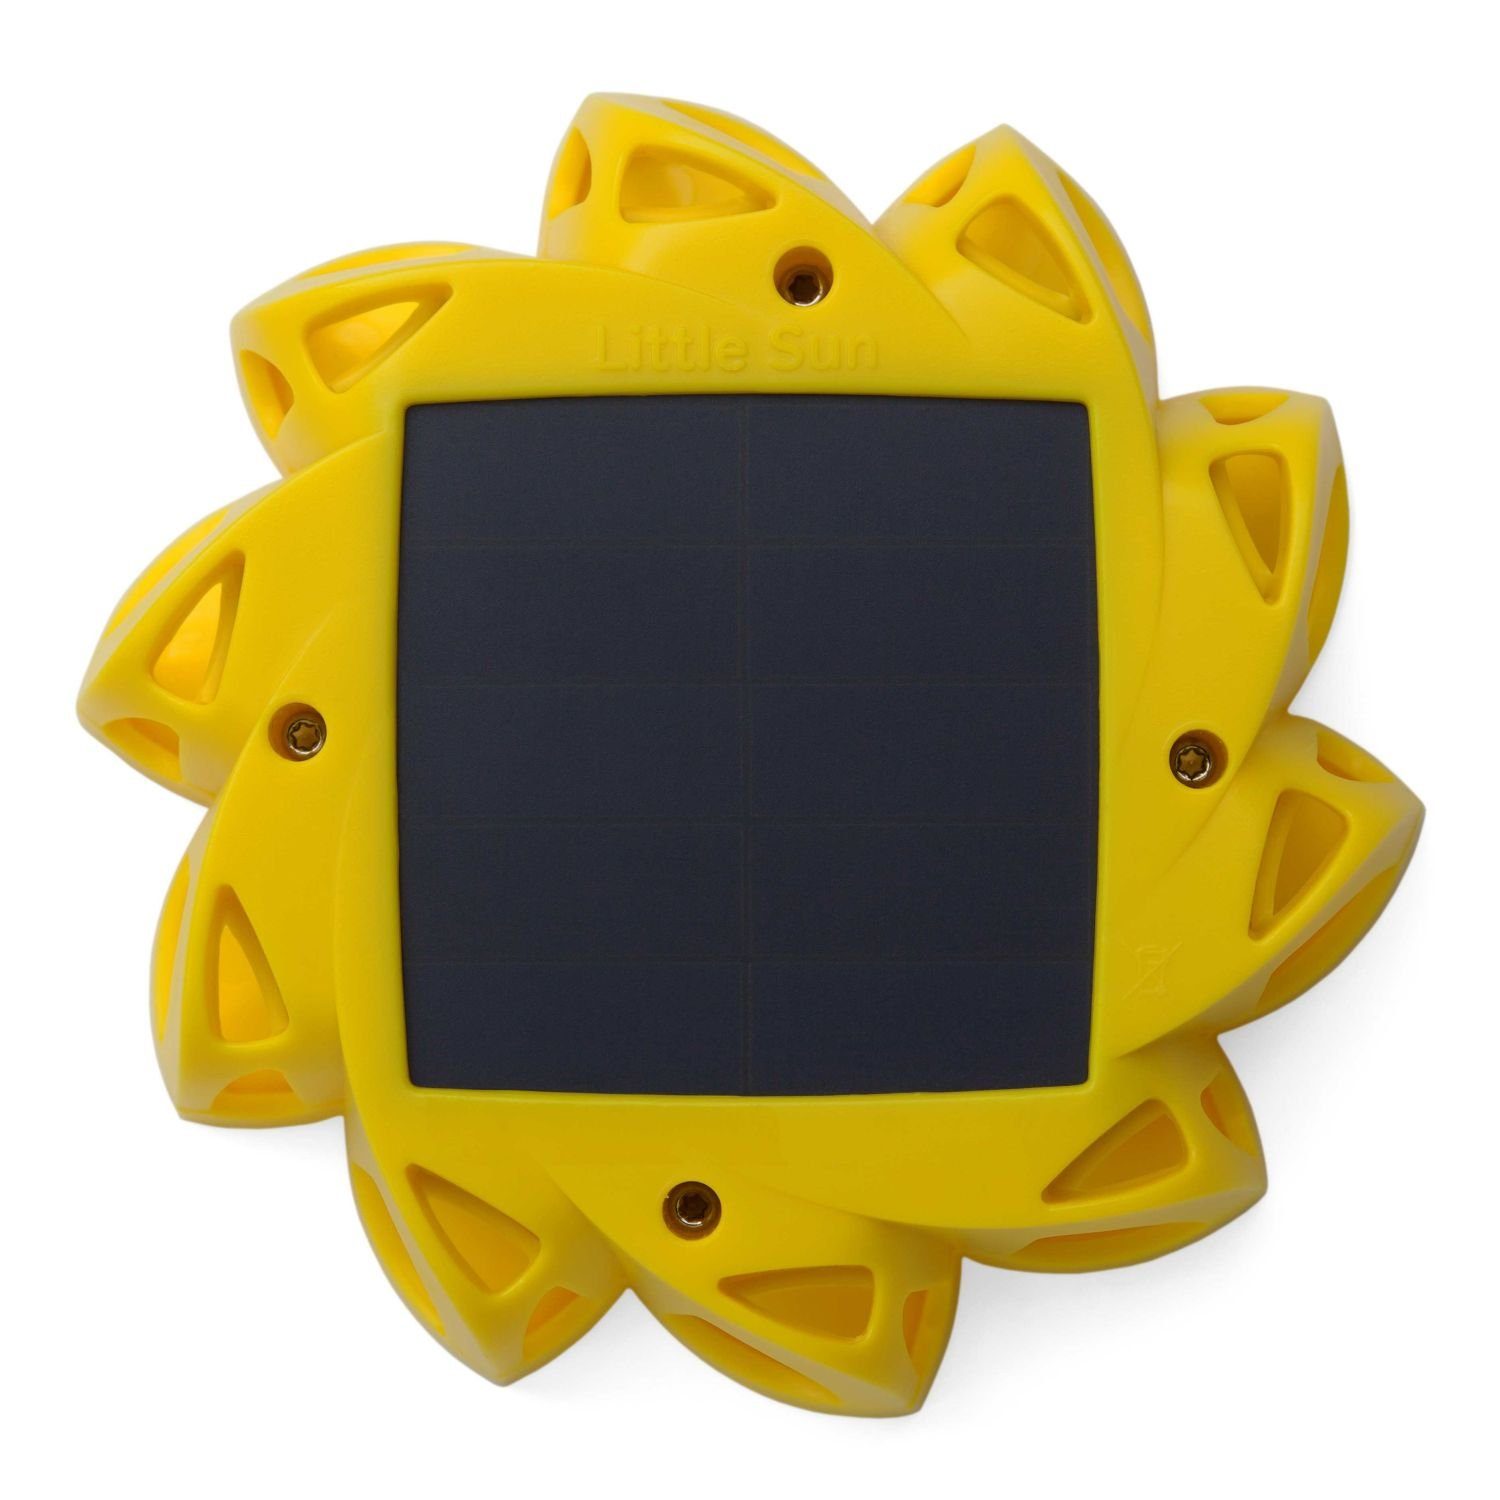 Little Sun integriert LED fest Dimmfunktion, Original, LED Solarleuchte